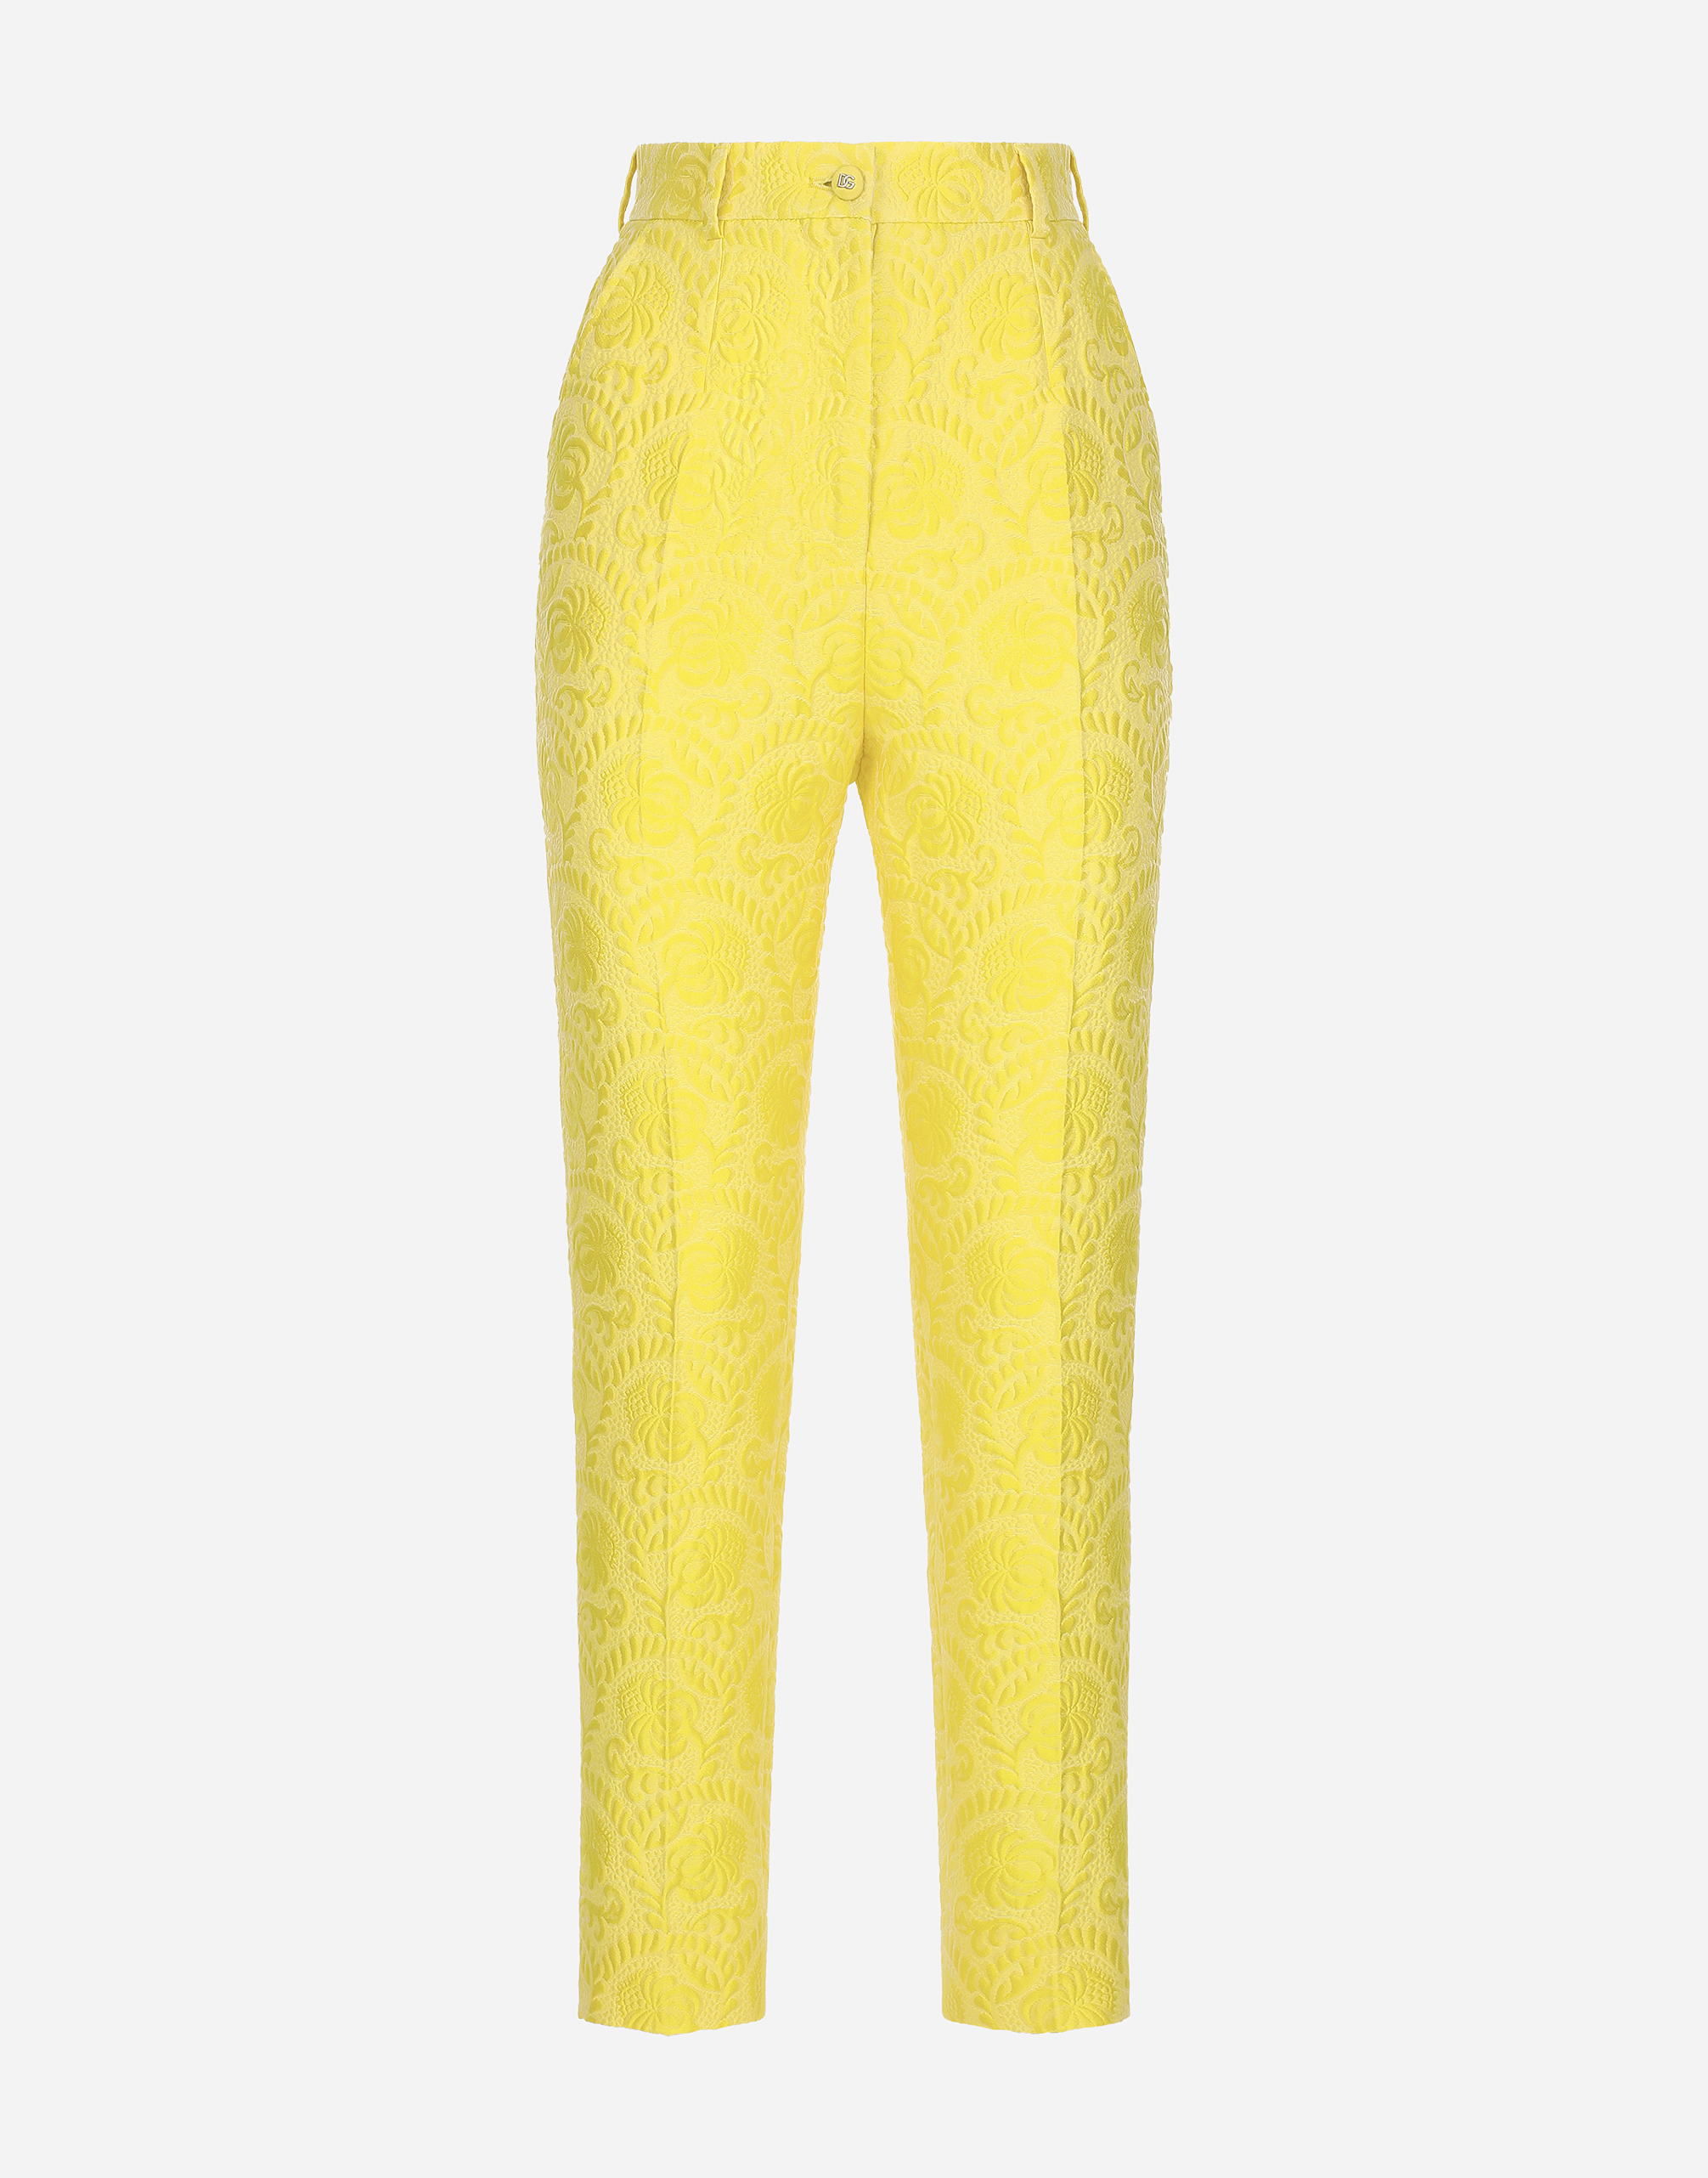 Women Yellow Korean Style Flare Trouser